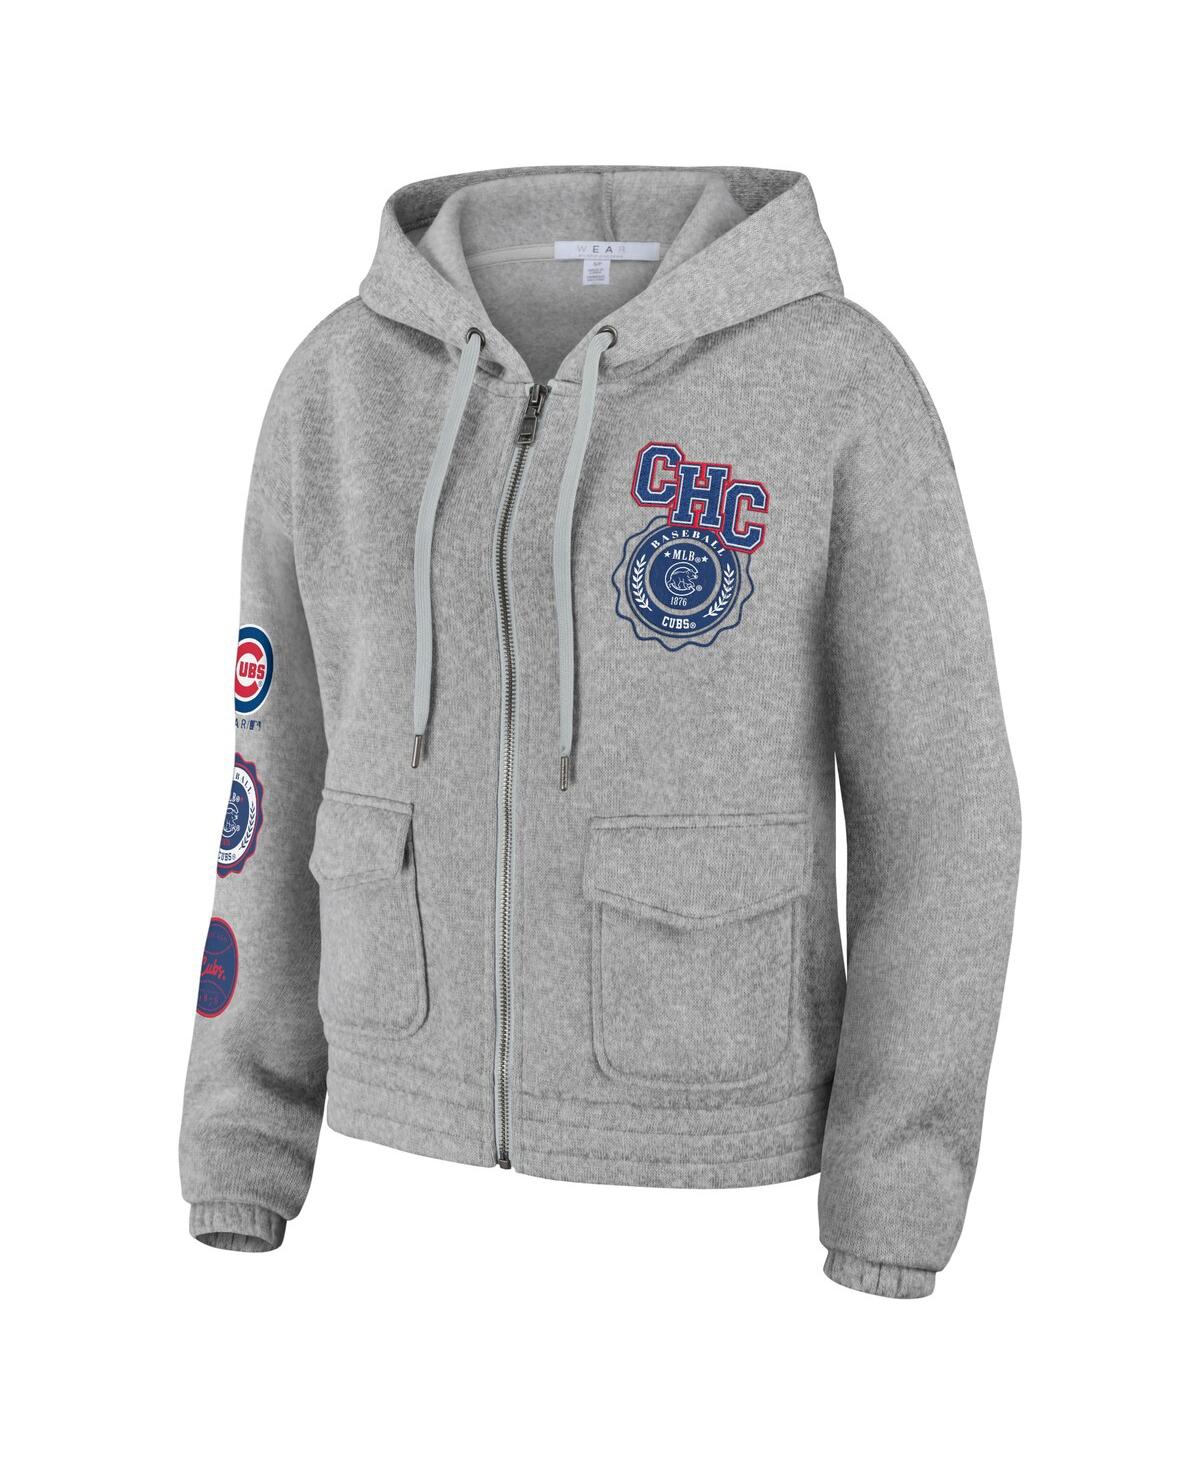 Shop Wear By Erin Andrews Women's  Gray Chicago Cubs Full-zip Hoodie